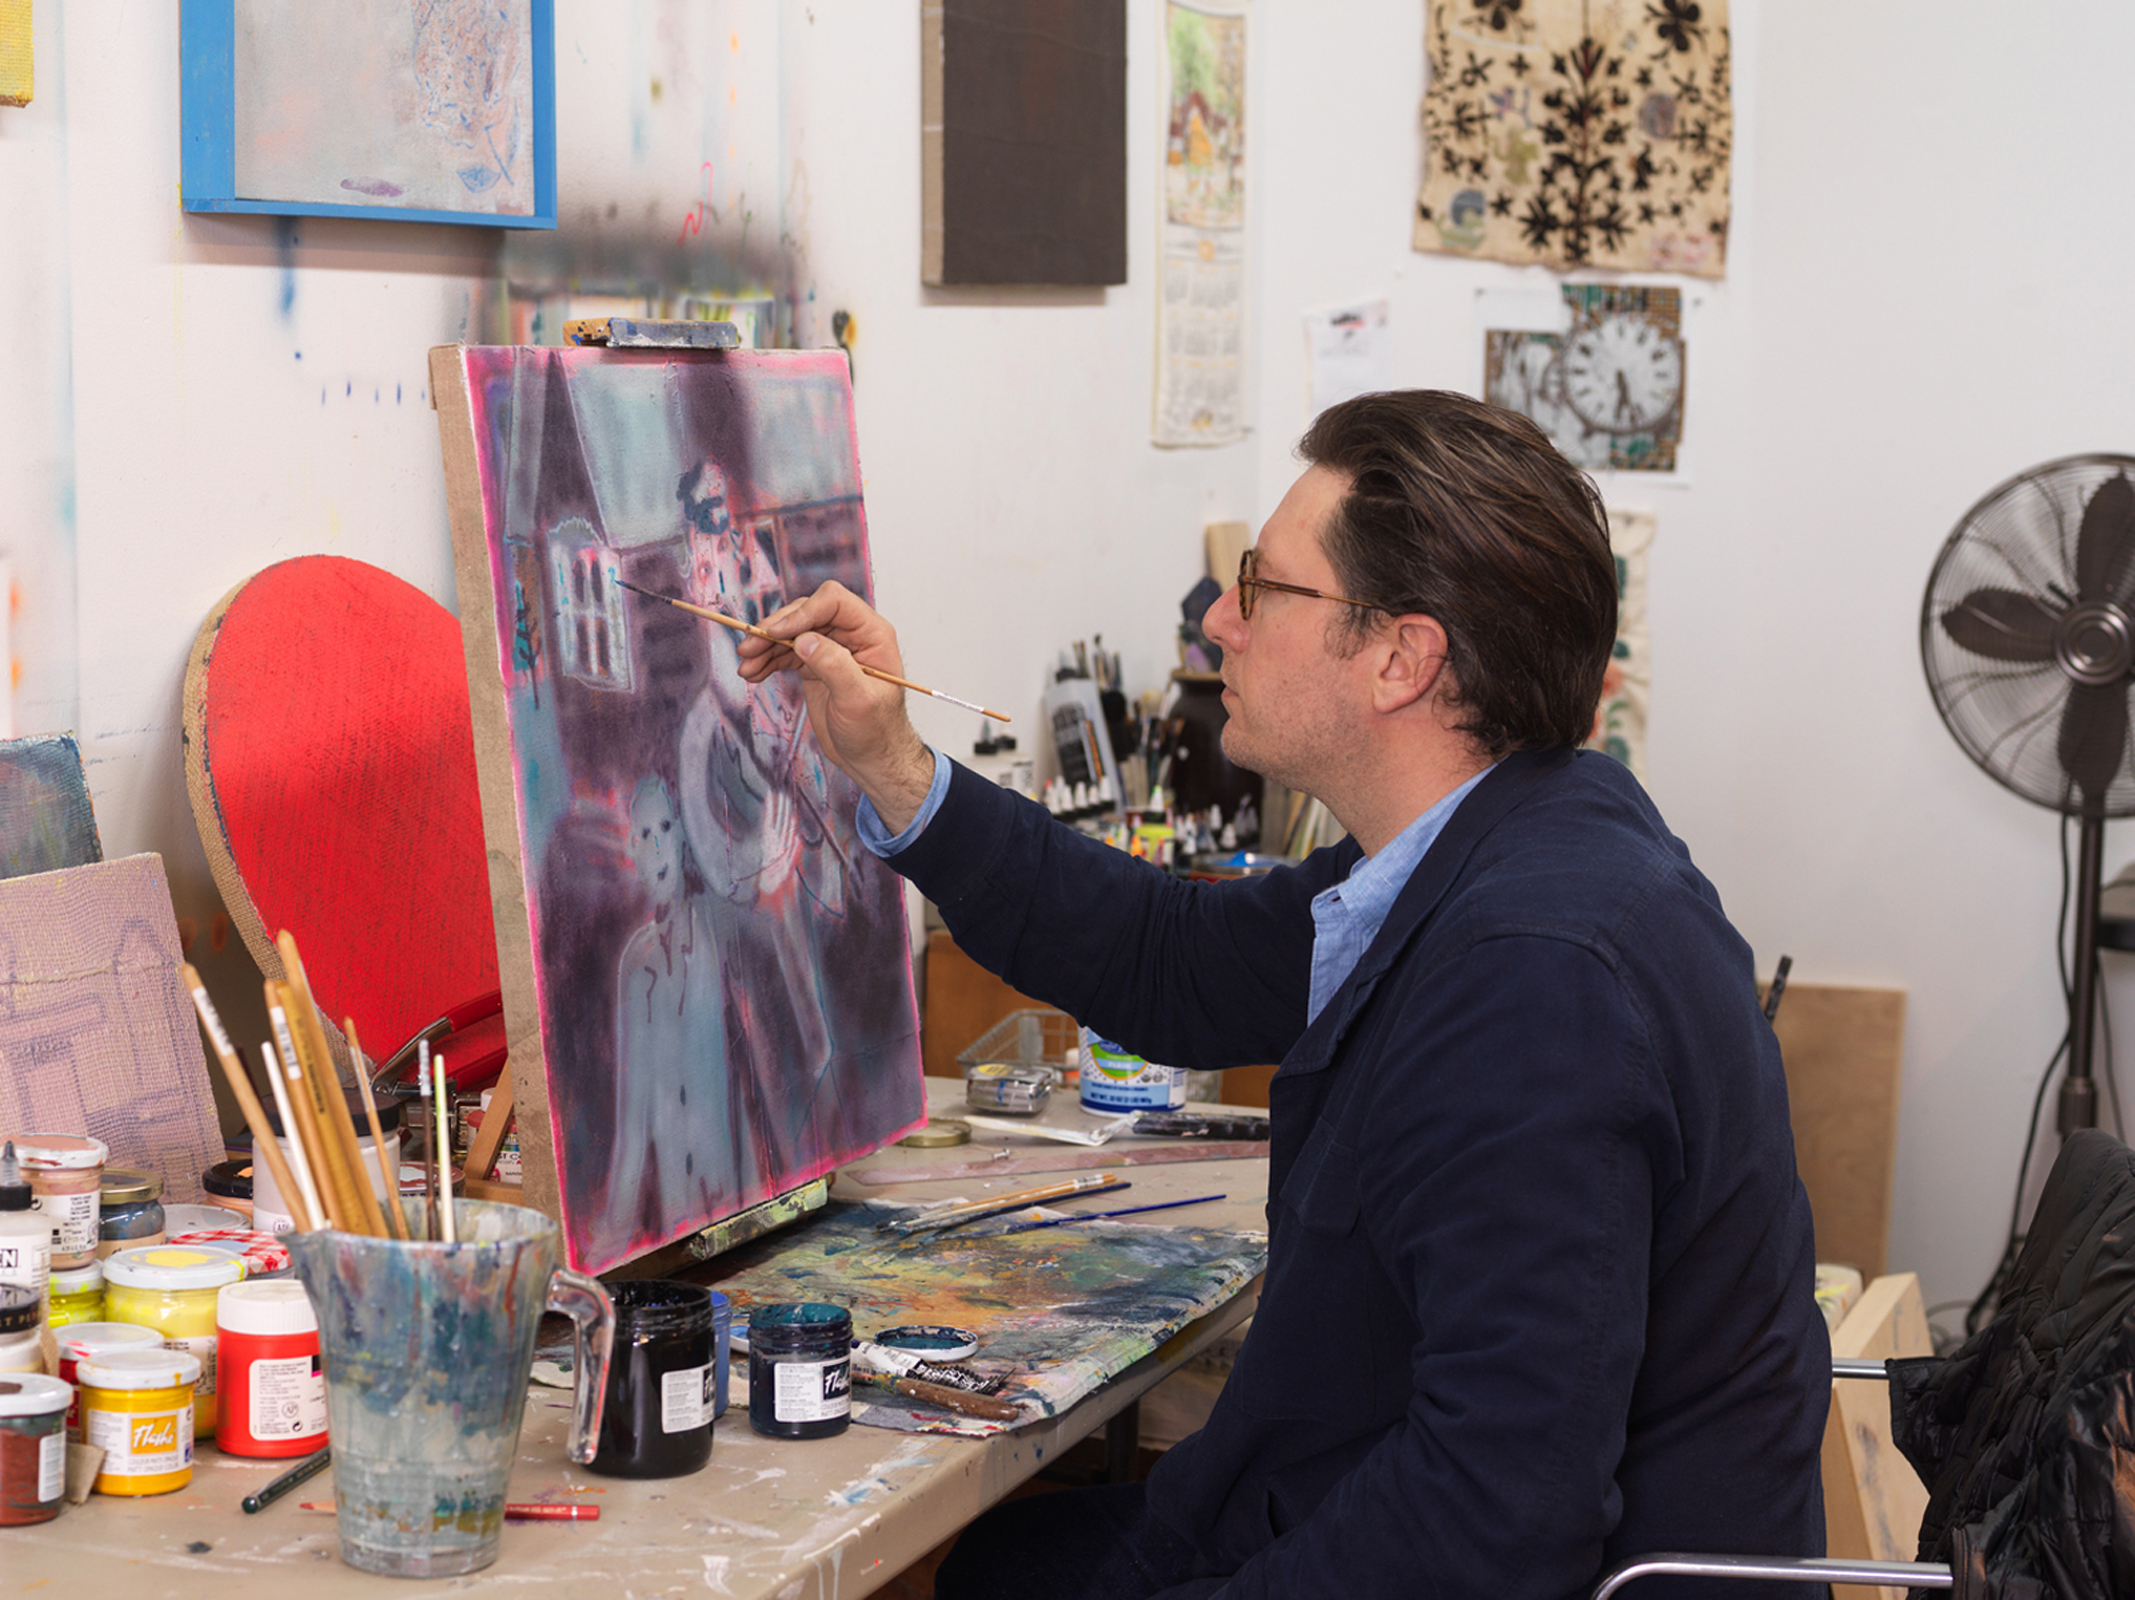 Zach Bruder in his studio, 2020